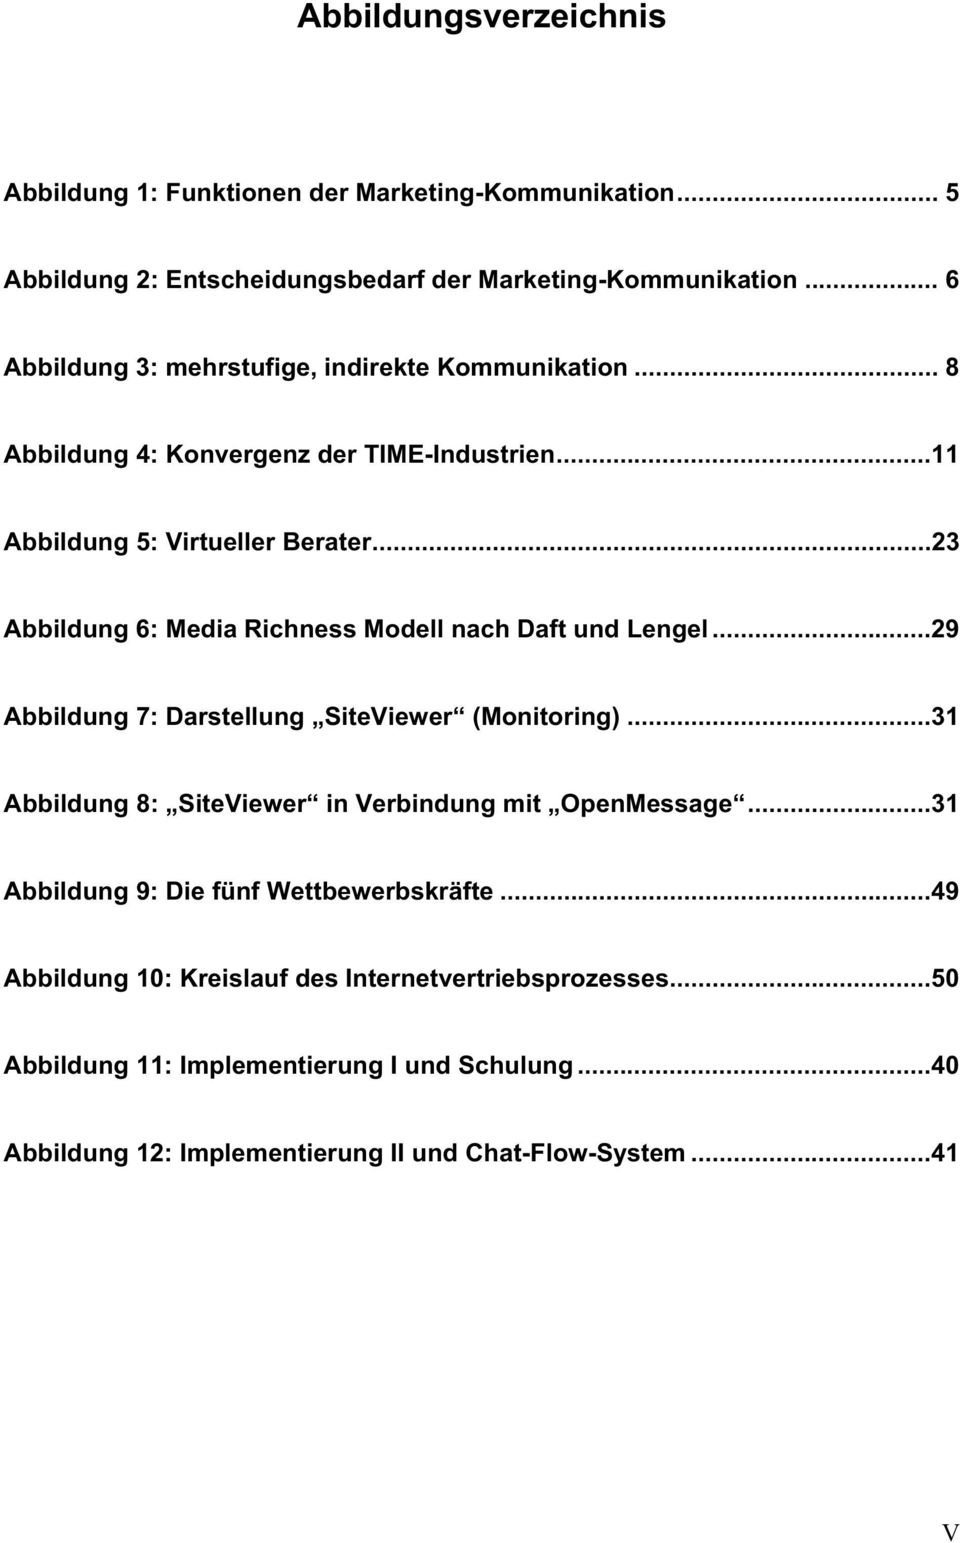 ..23 Abbildung 6: Media Richness Modell nach Daft und Lengel...29 Abbildung 7: Darstellung SiteViewer (Monitoring).